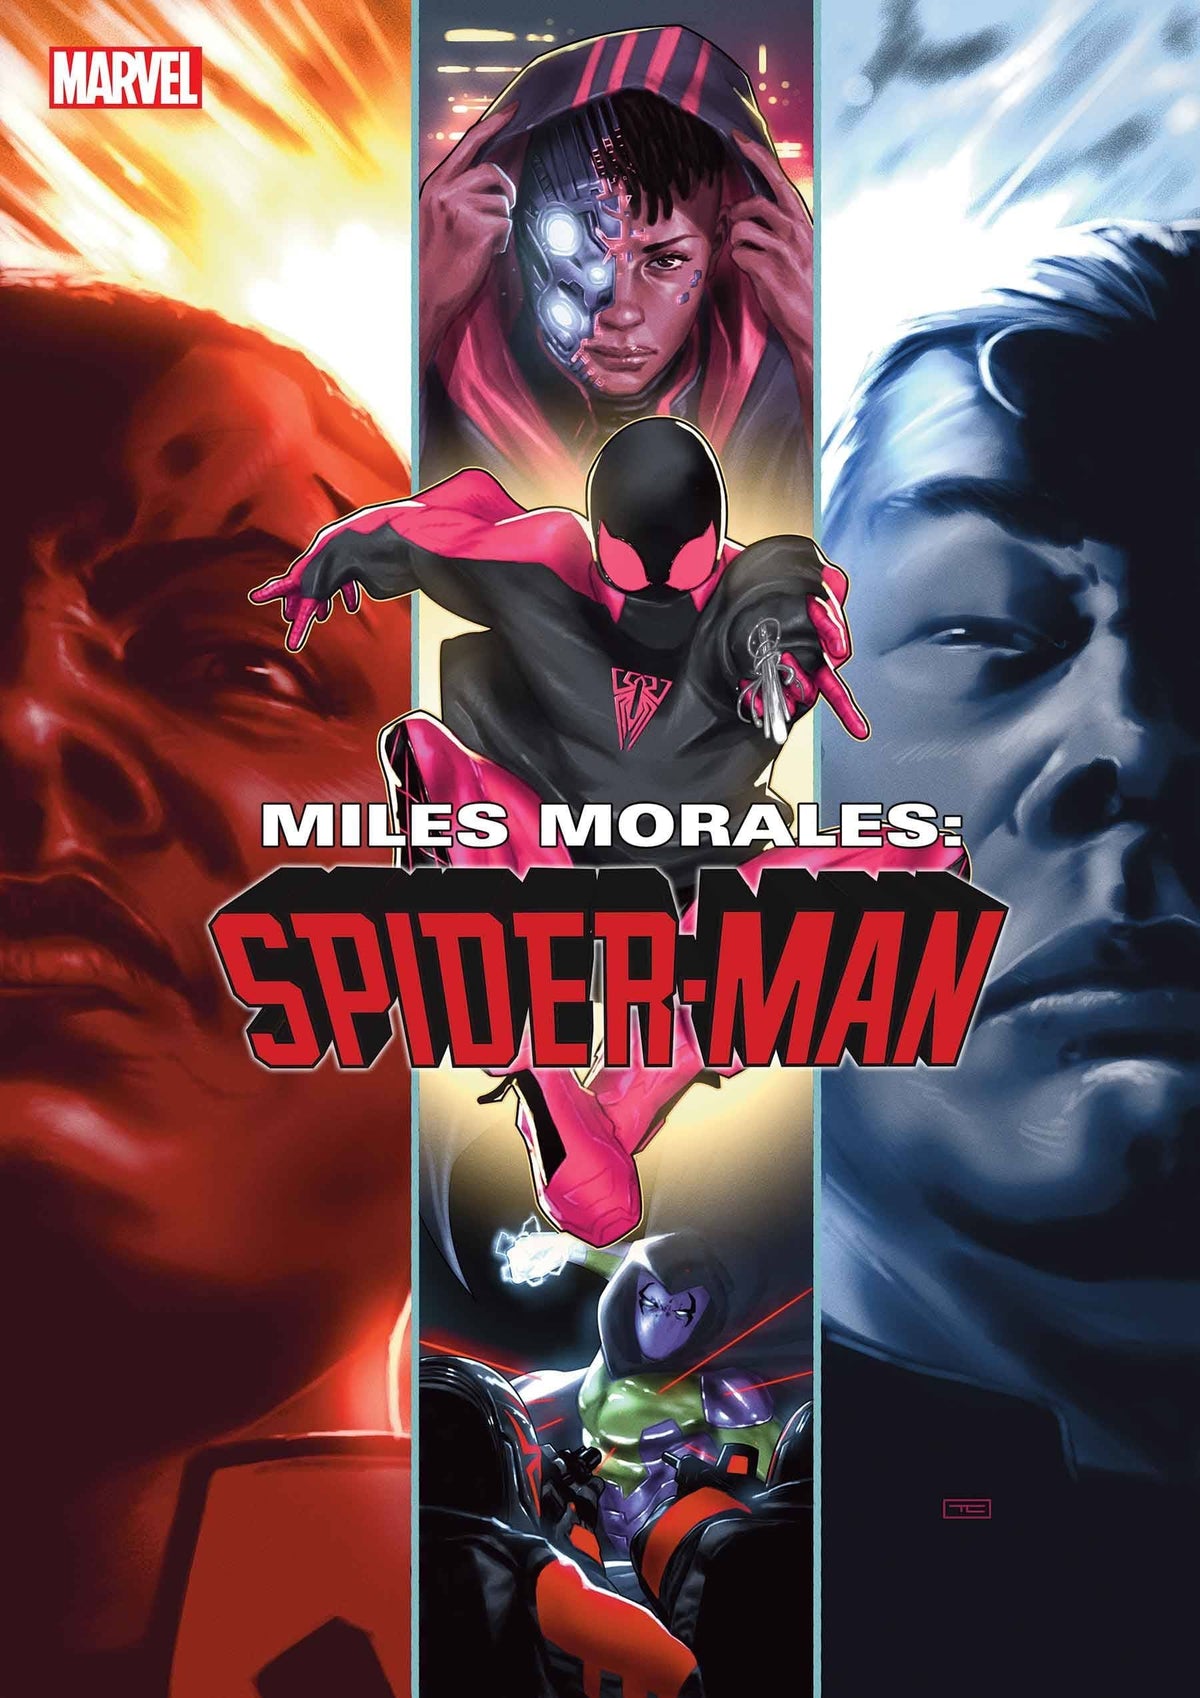 MILES MORALES SPIDER-MAN #41 - Third Eye